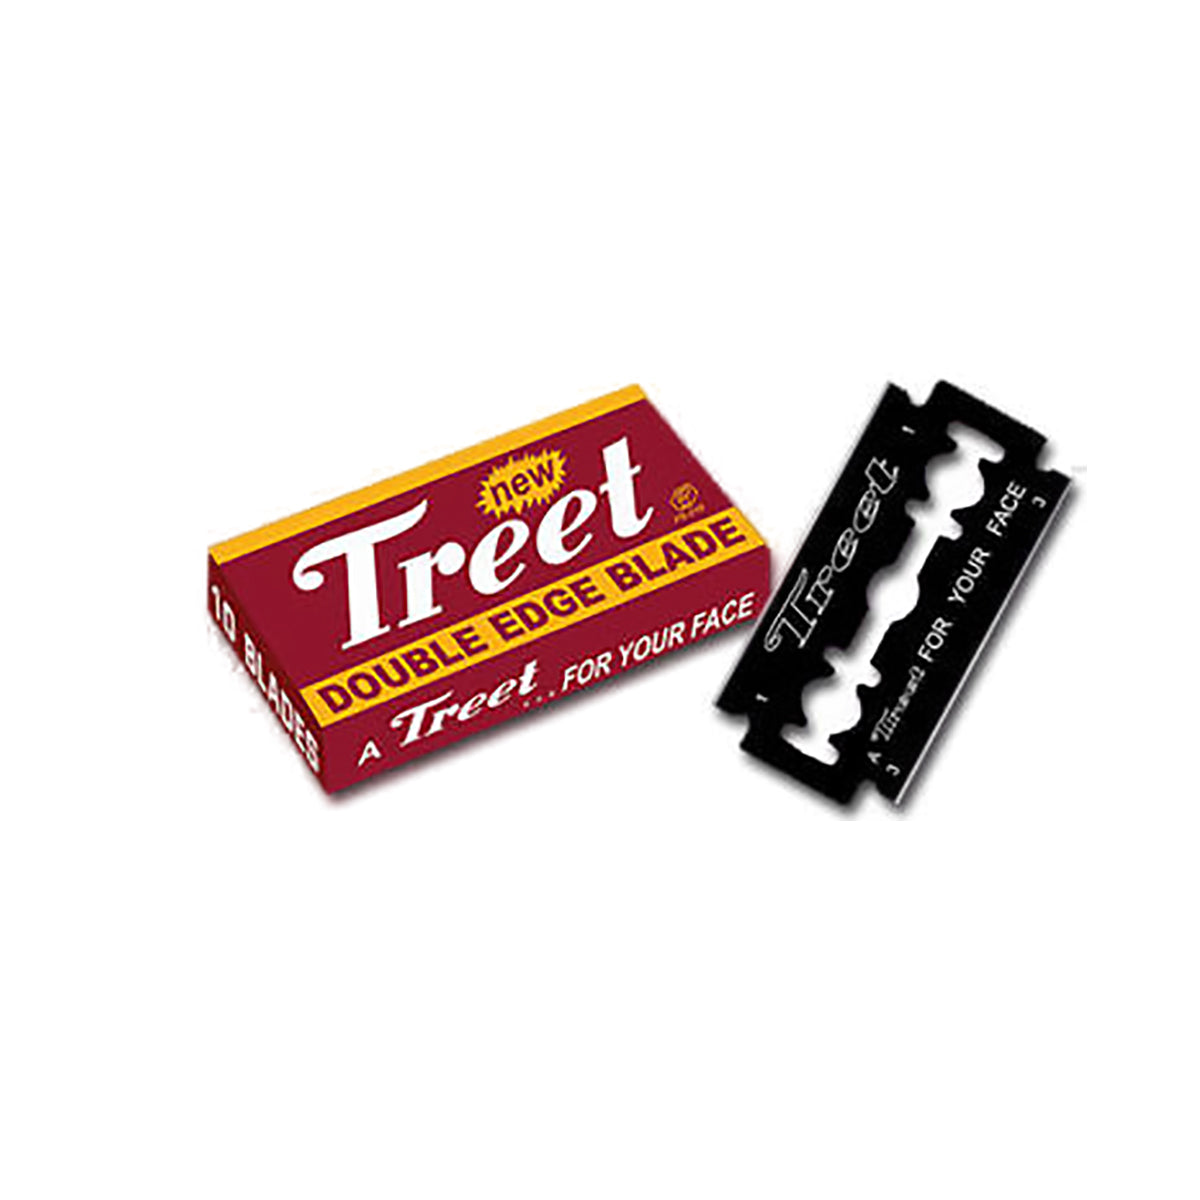 Treet Carbon Steel Double Edge Razor Blades (10 Blade Pack)